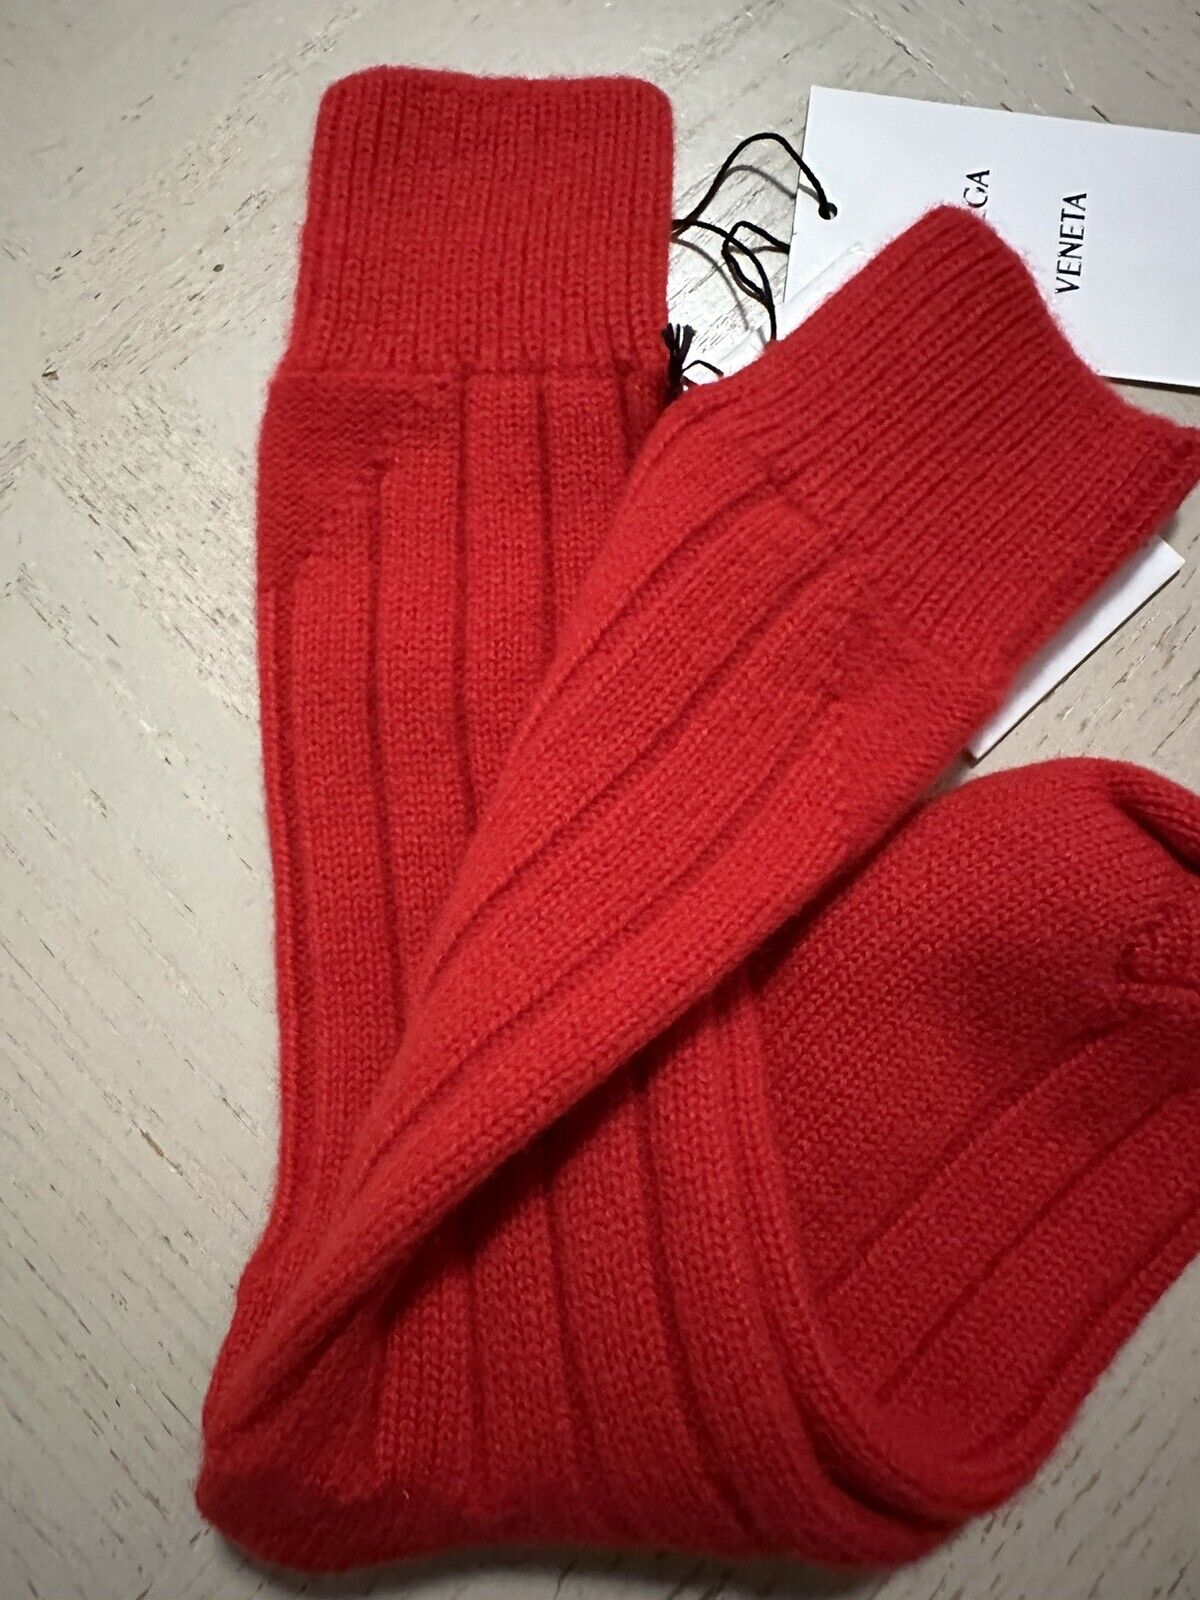 NWT $390 Bottega Veneta Ribbed Cashmere Socks Color Red Size S Italy